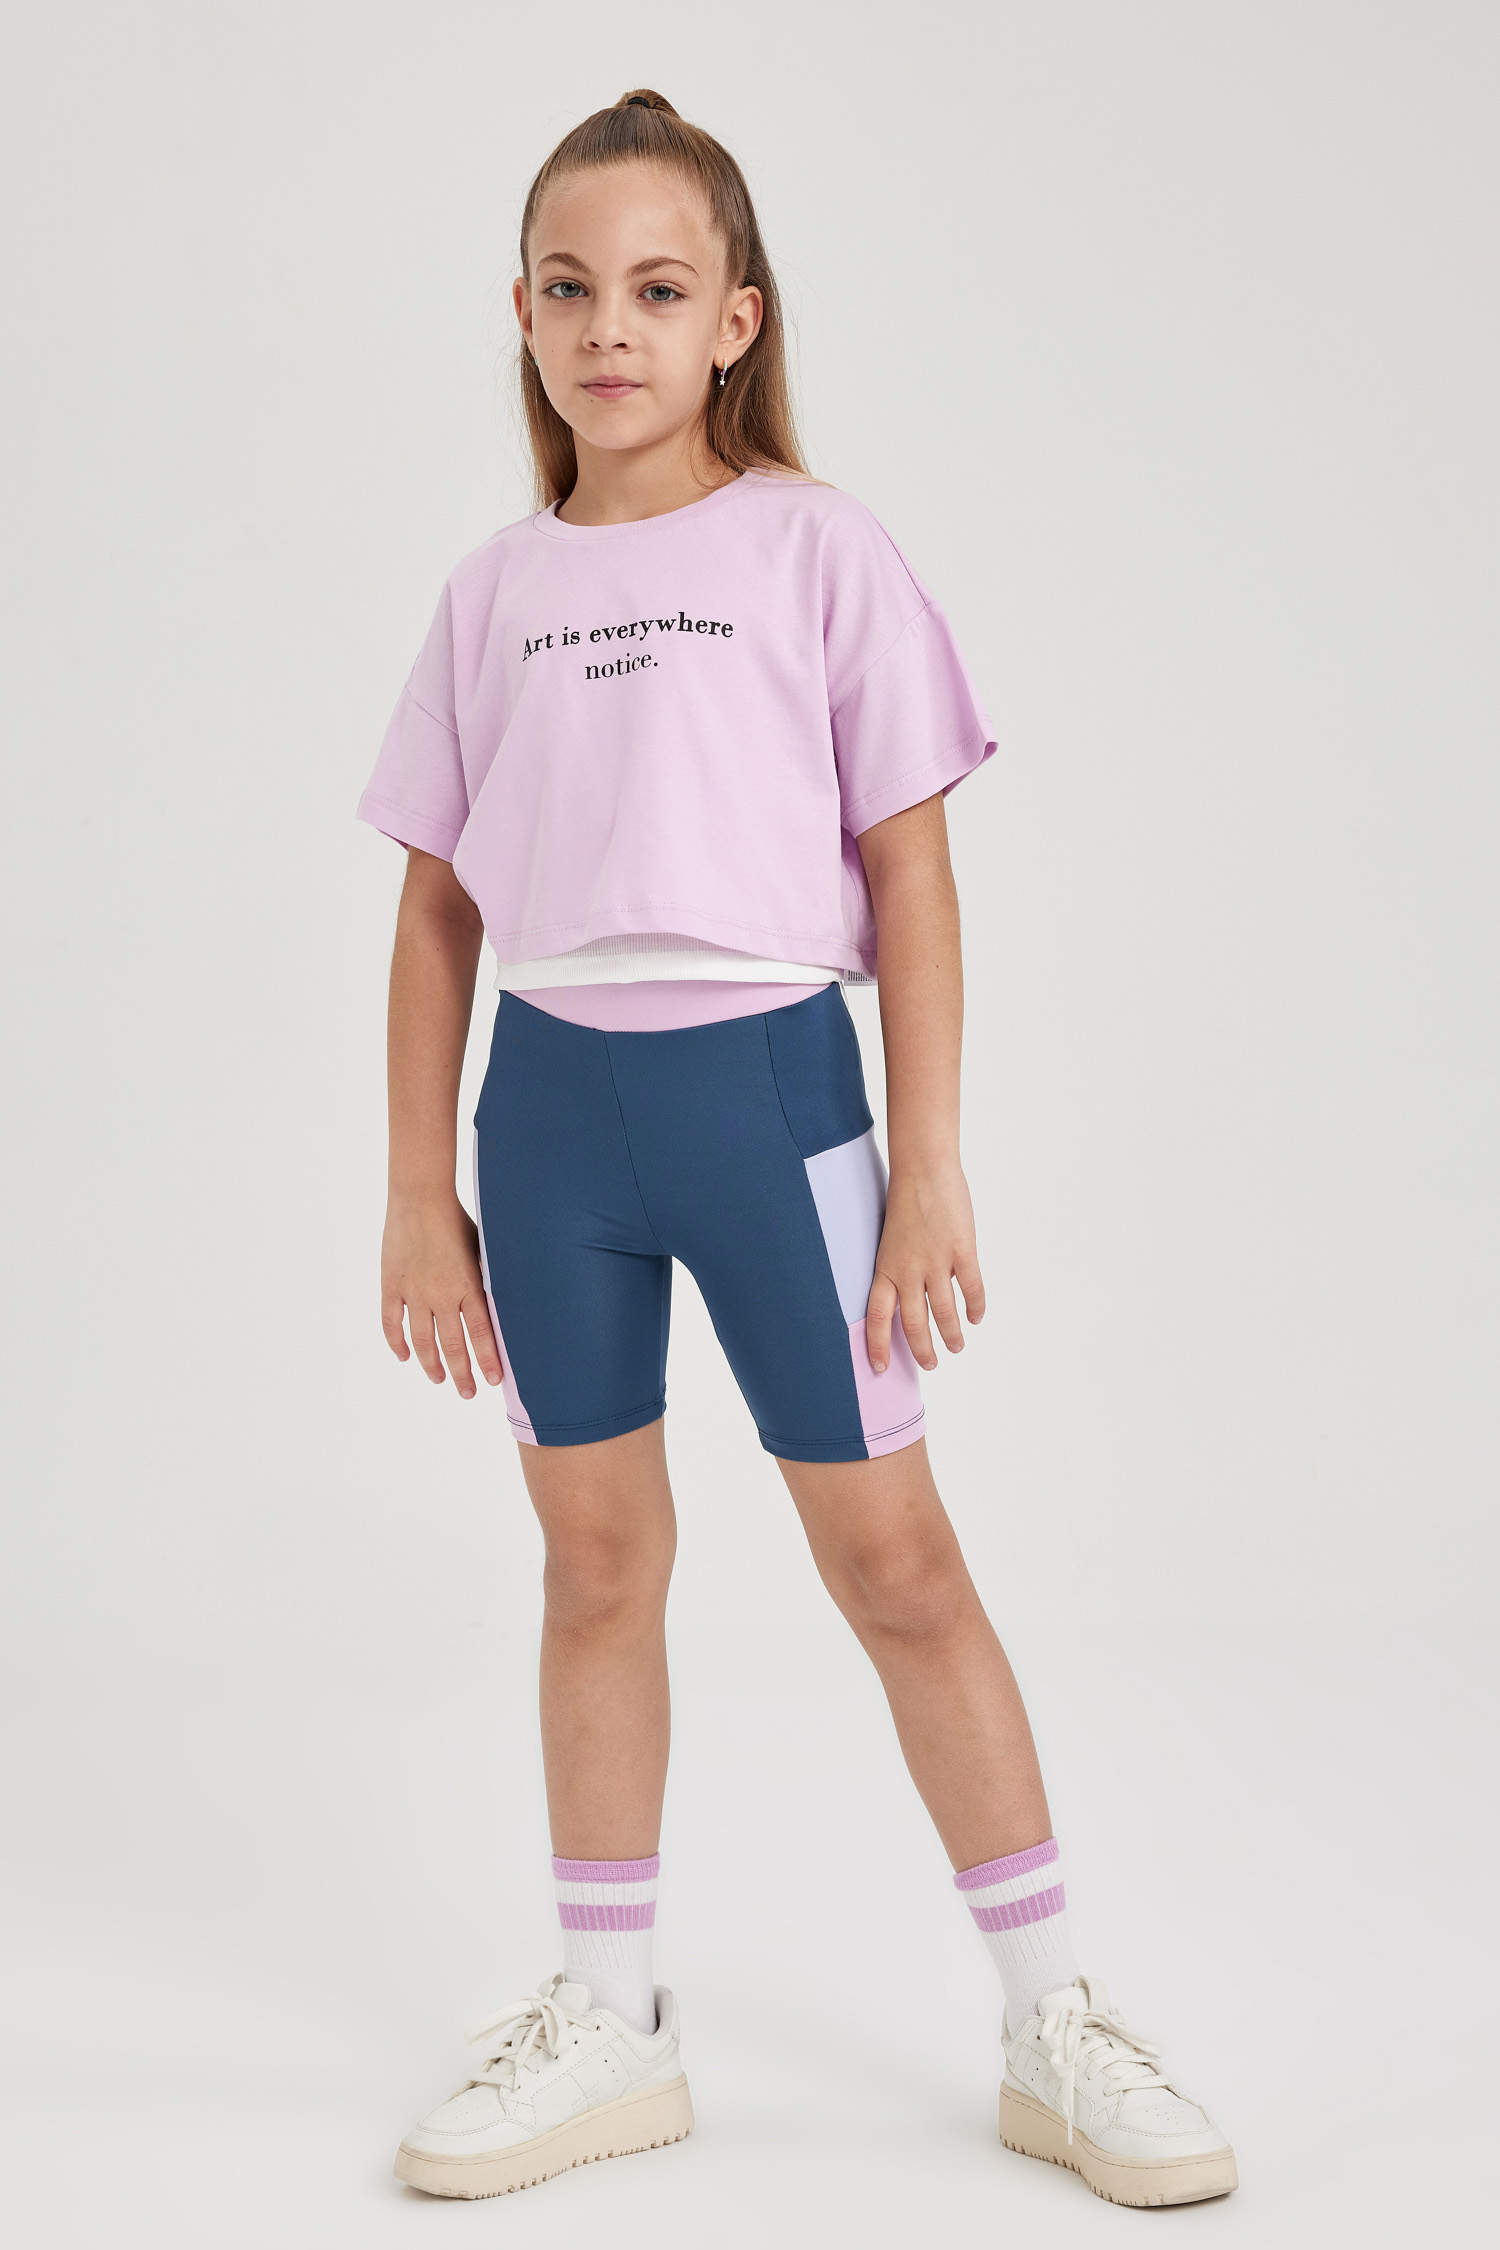 Silky Toes Girls Soft Cotton Summer Bike Shorts Casual Breathable Short  Biker Leggings School Uniform